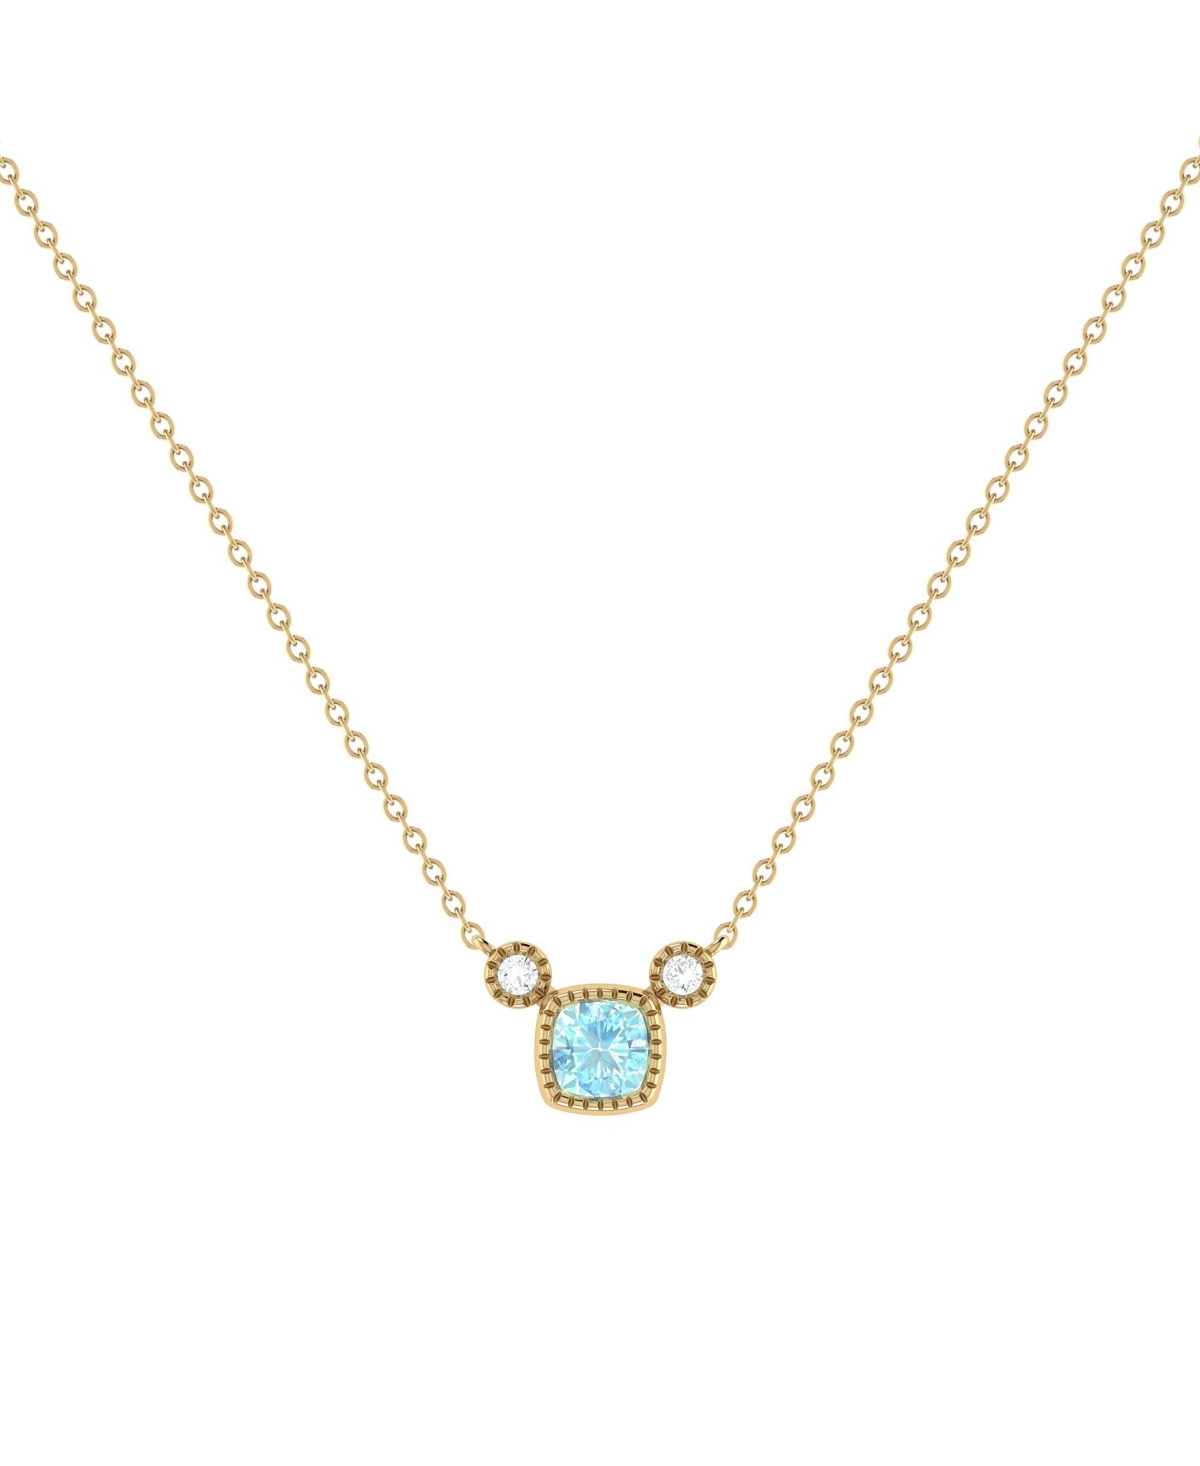 Cushion Cut Aquamarine Gemstone, Natural Diamond 14K Yellow Gold Birthstone Necklace - Yellow